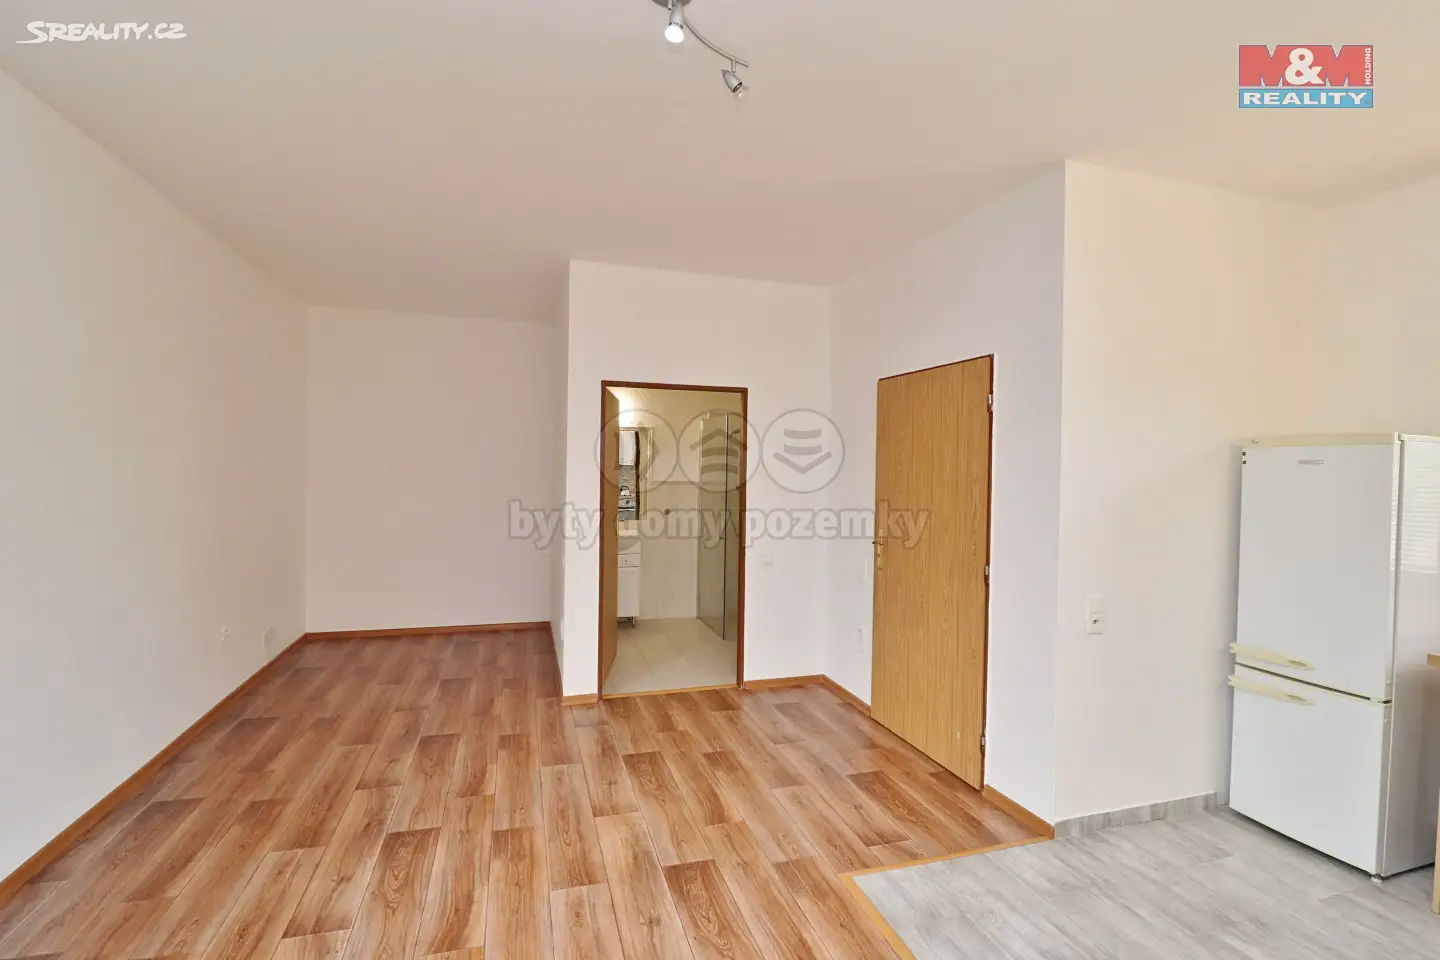 Pronájem bytu 1+kk 32 m², Sadov - Lesov, okres Karlovy Vary